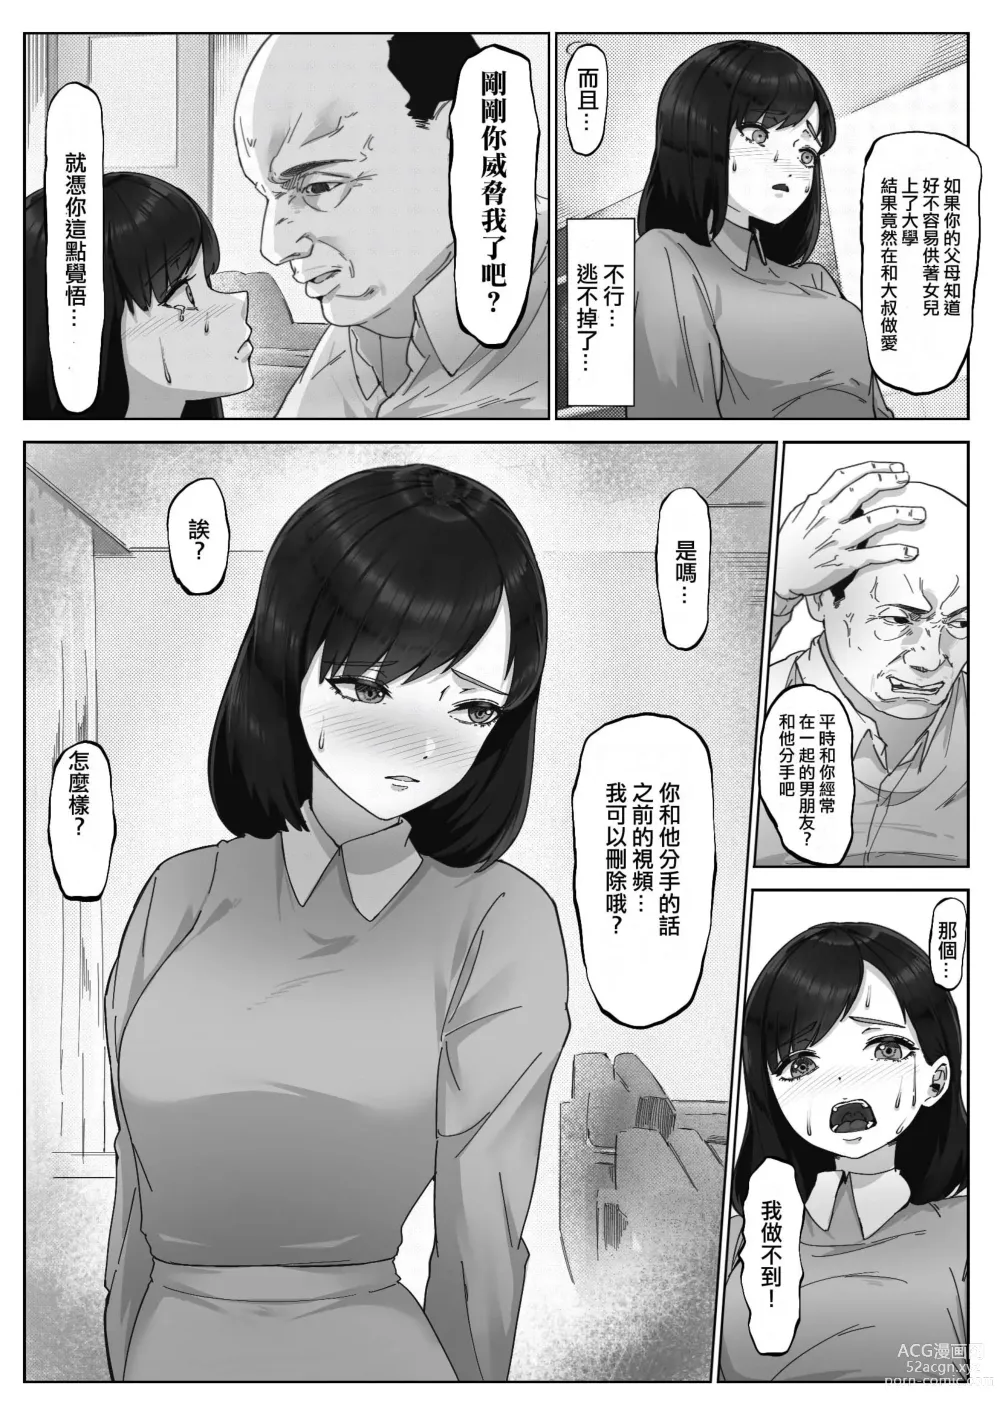 Page 15 of doujinshi 因為想要學分所以和老師上床了這件事